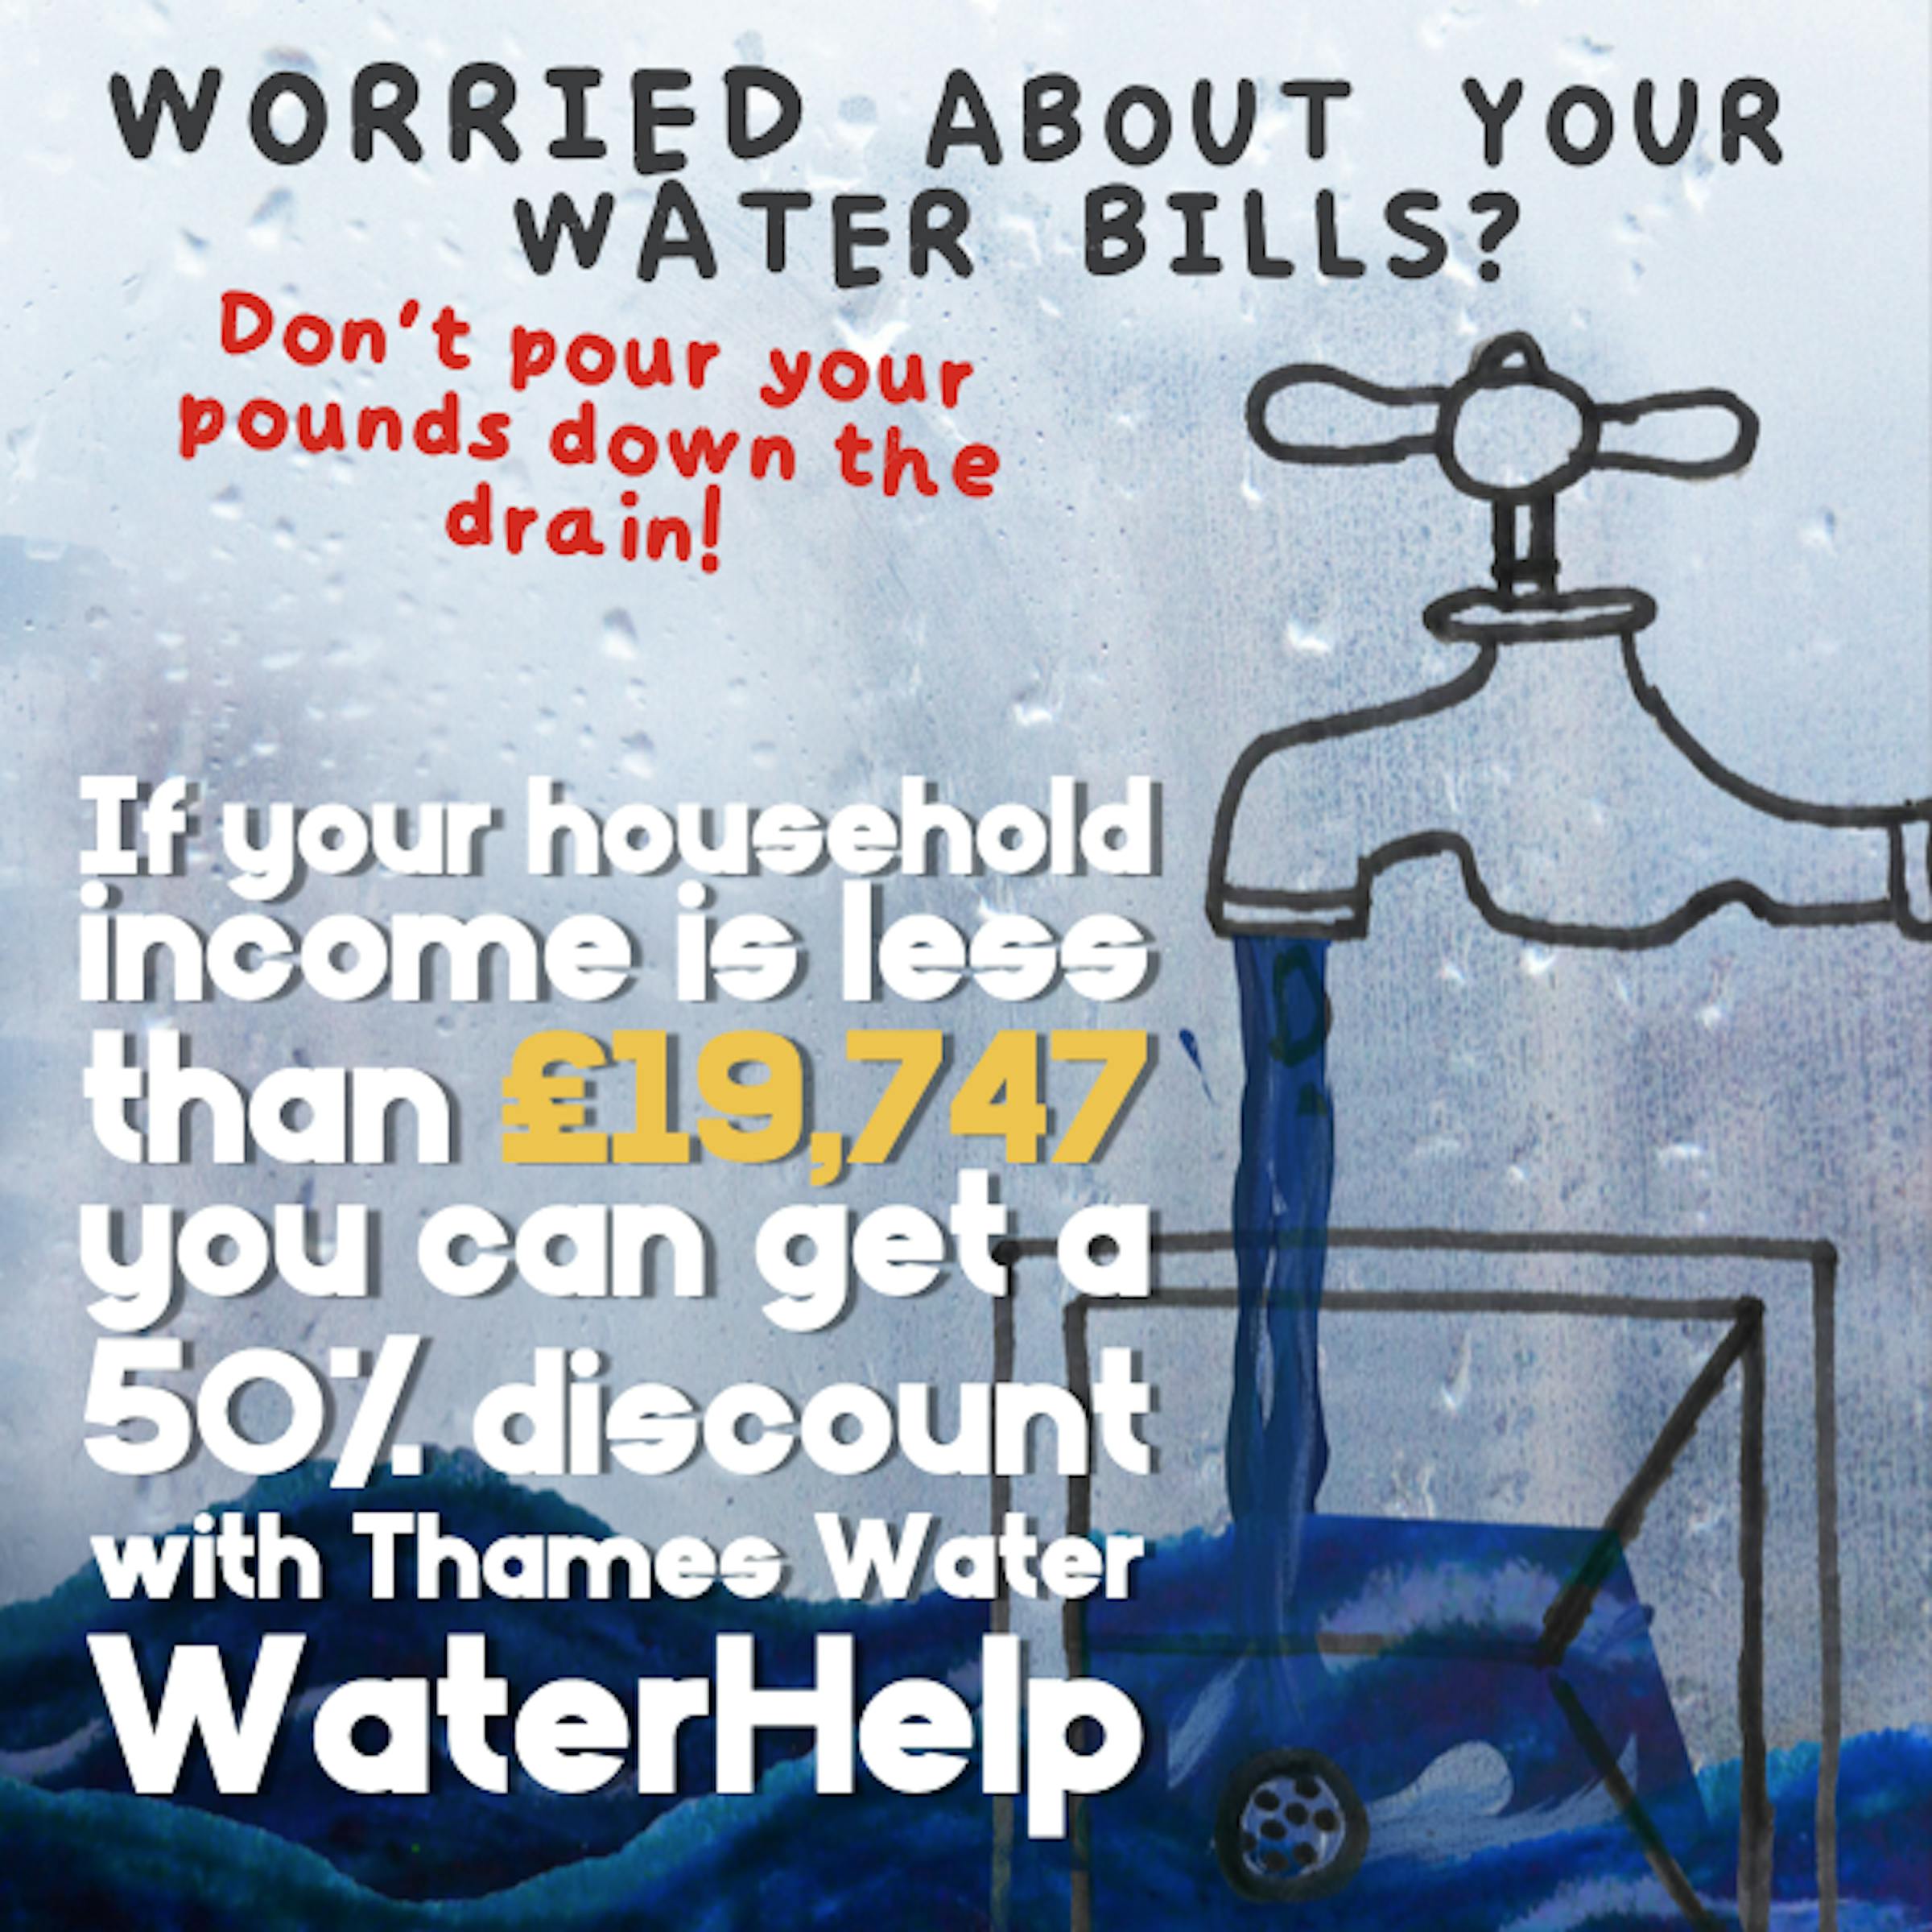 Thames Water Waterhelp - Get help with water bills